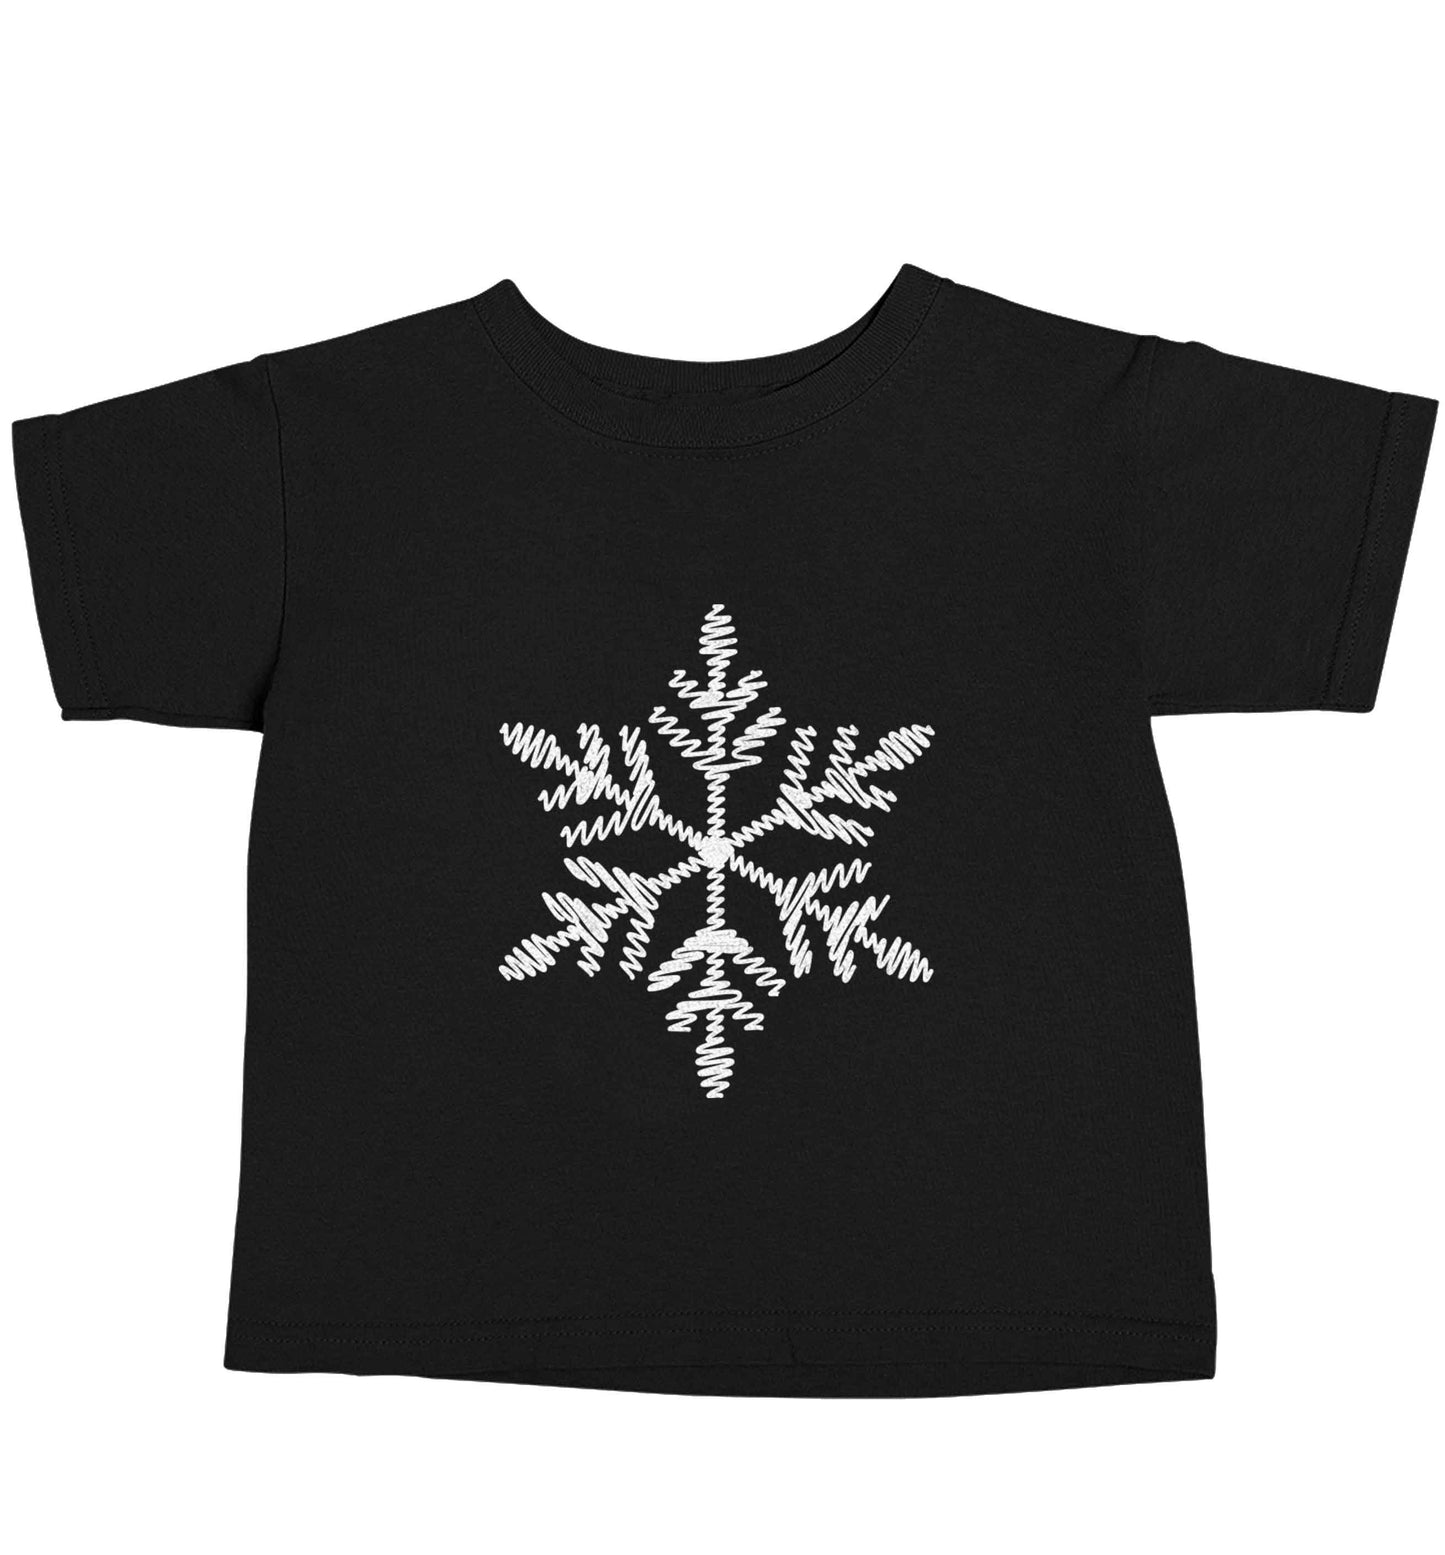 Snowflake Black baby toddler Tshirt 2 years